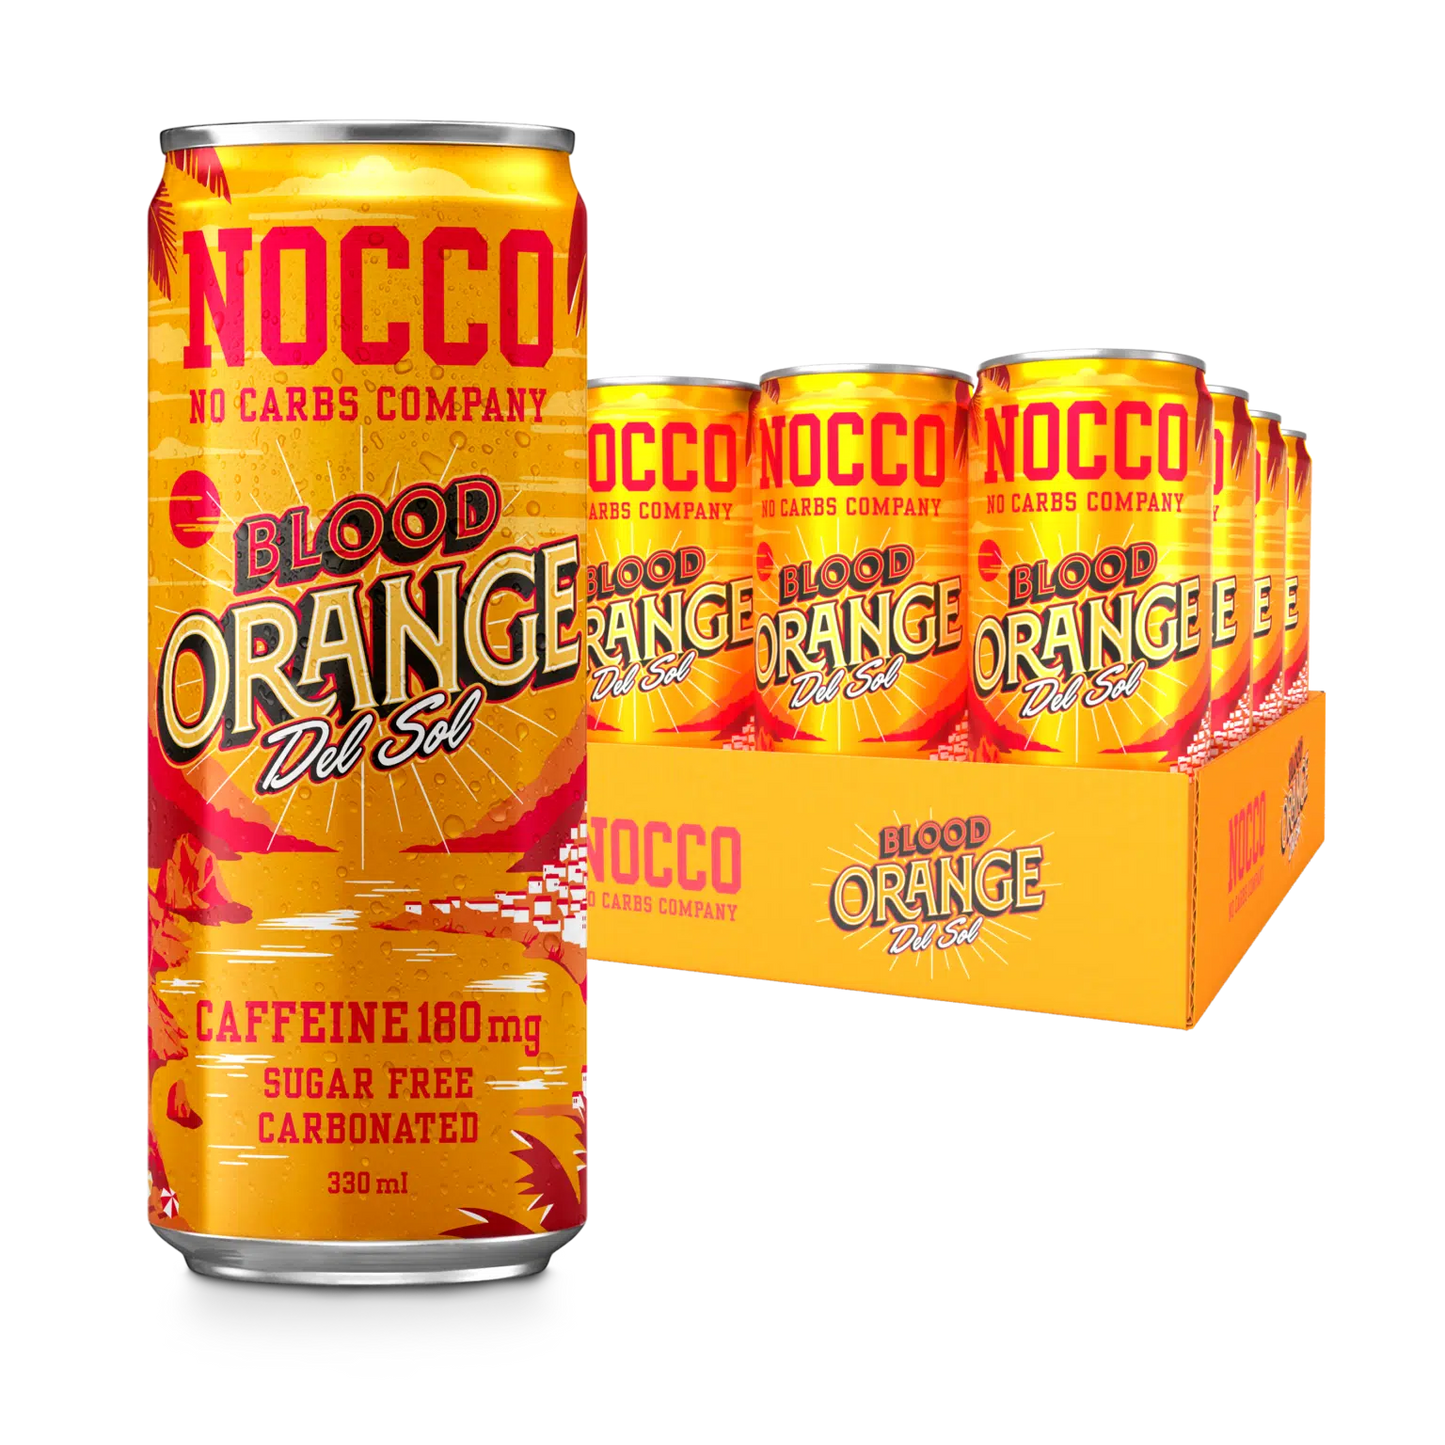 NOCCO Blood Orange Del Sol 330ml x 24